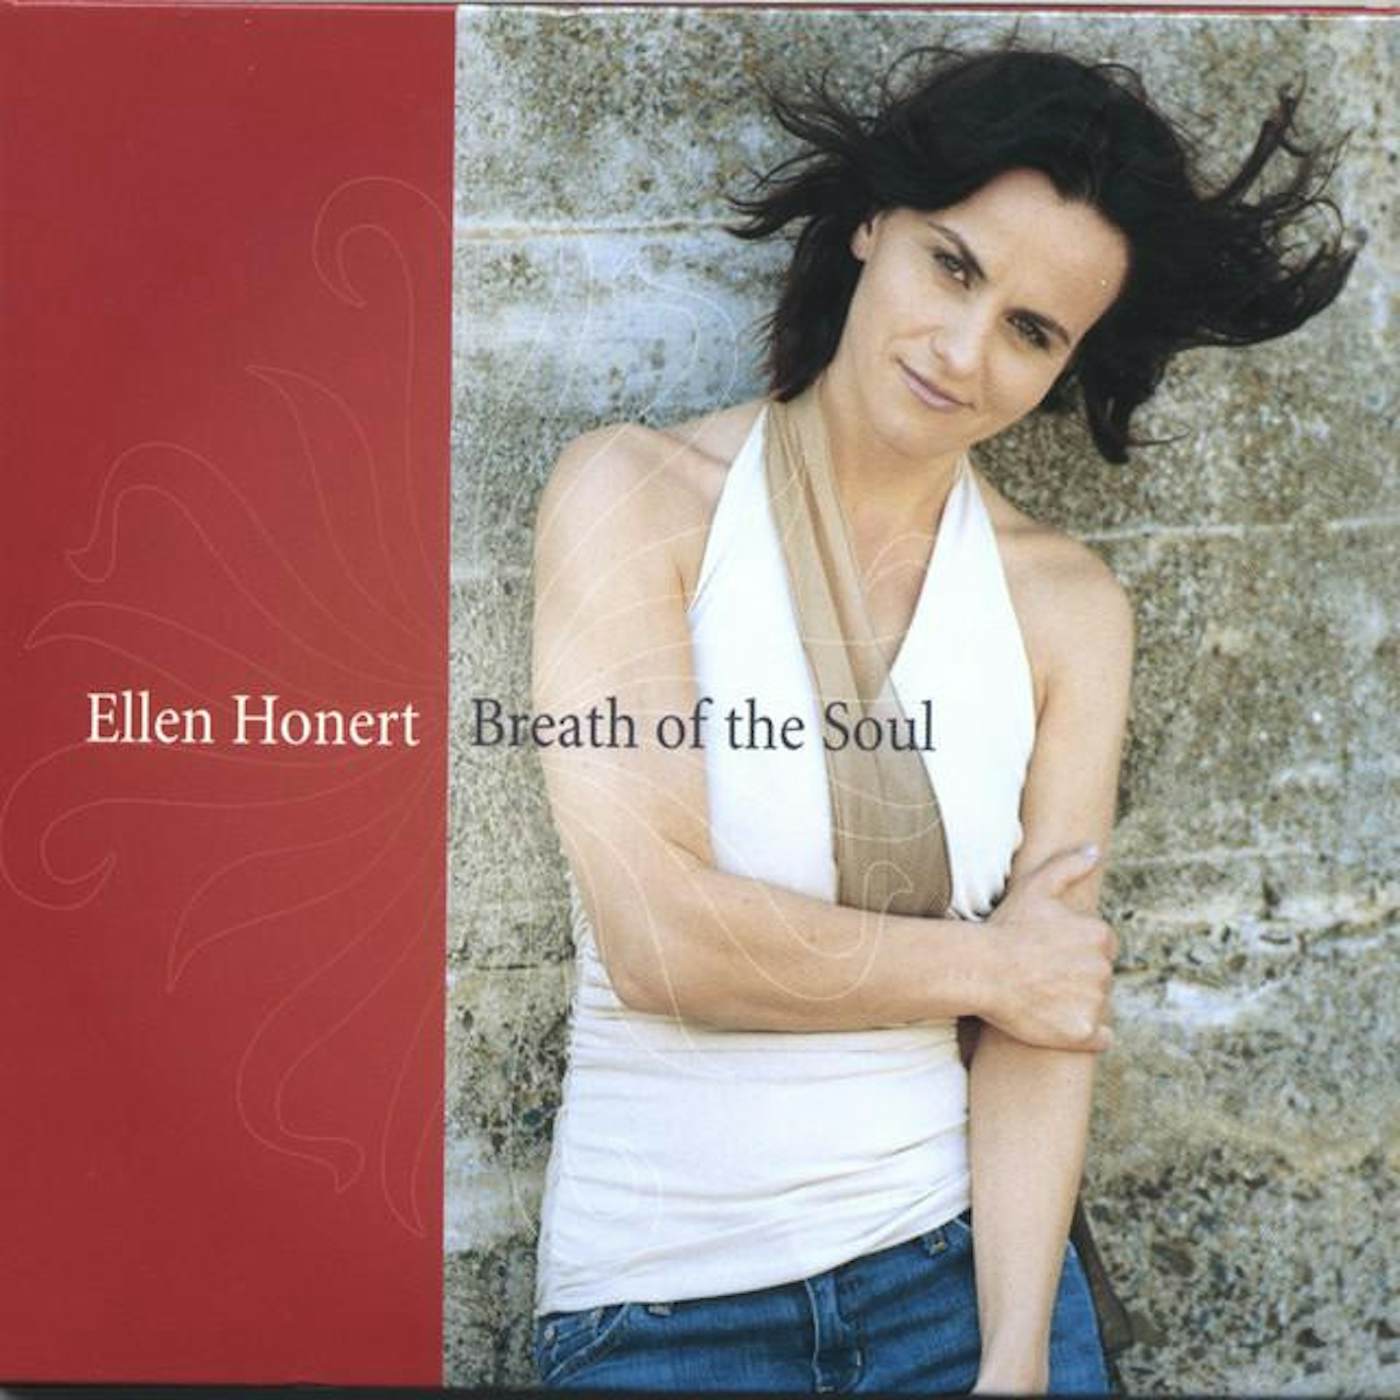 Ellen Honert